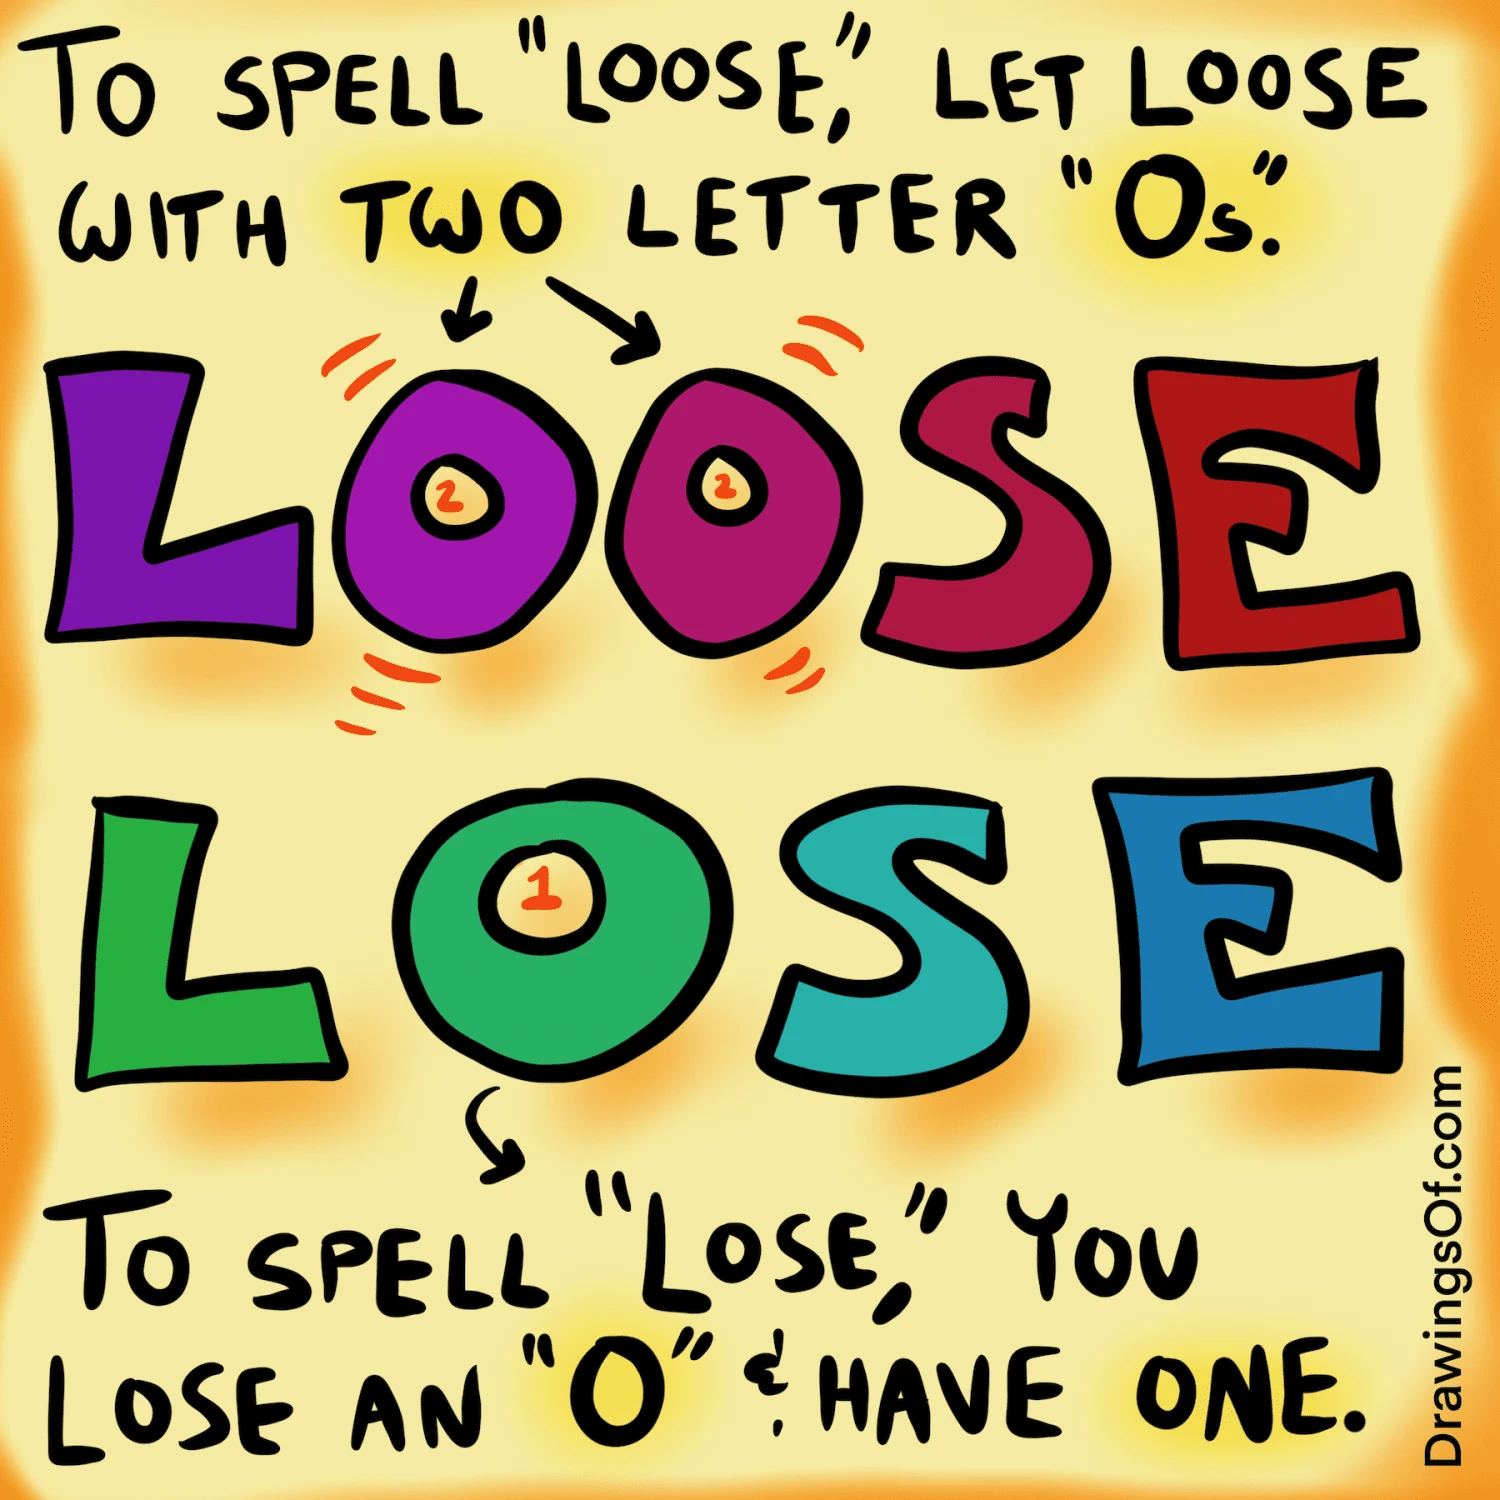 Lose or loose